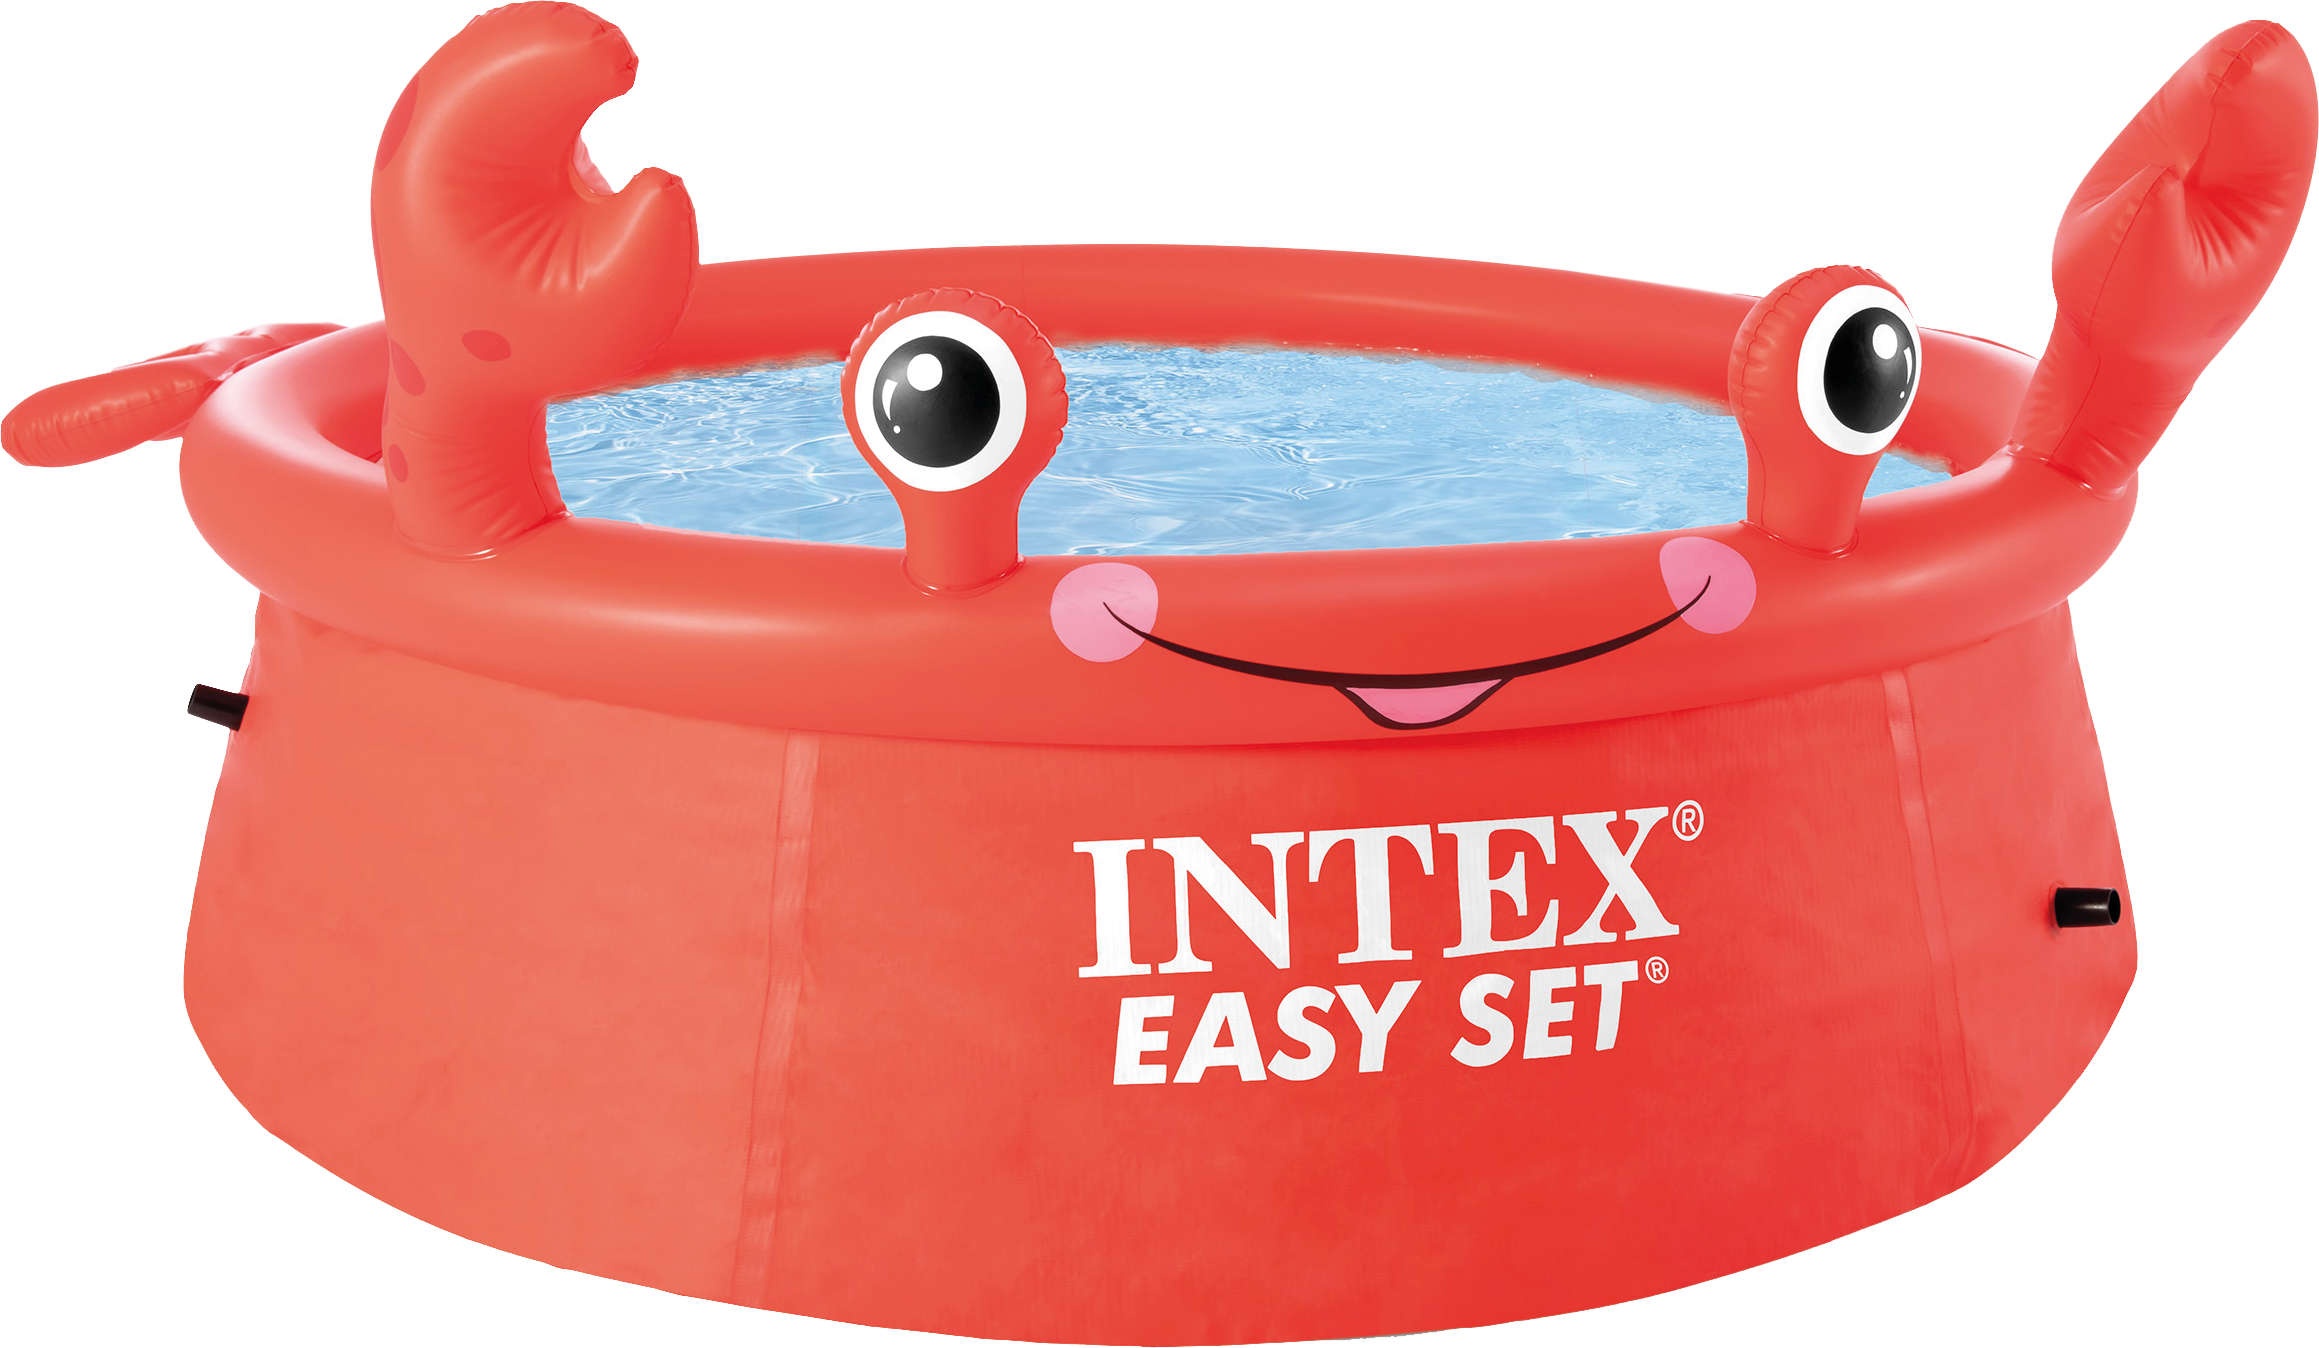 INTEX EasySet Pool "HappyCrab"